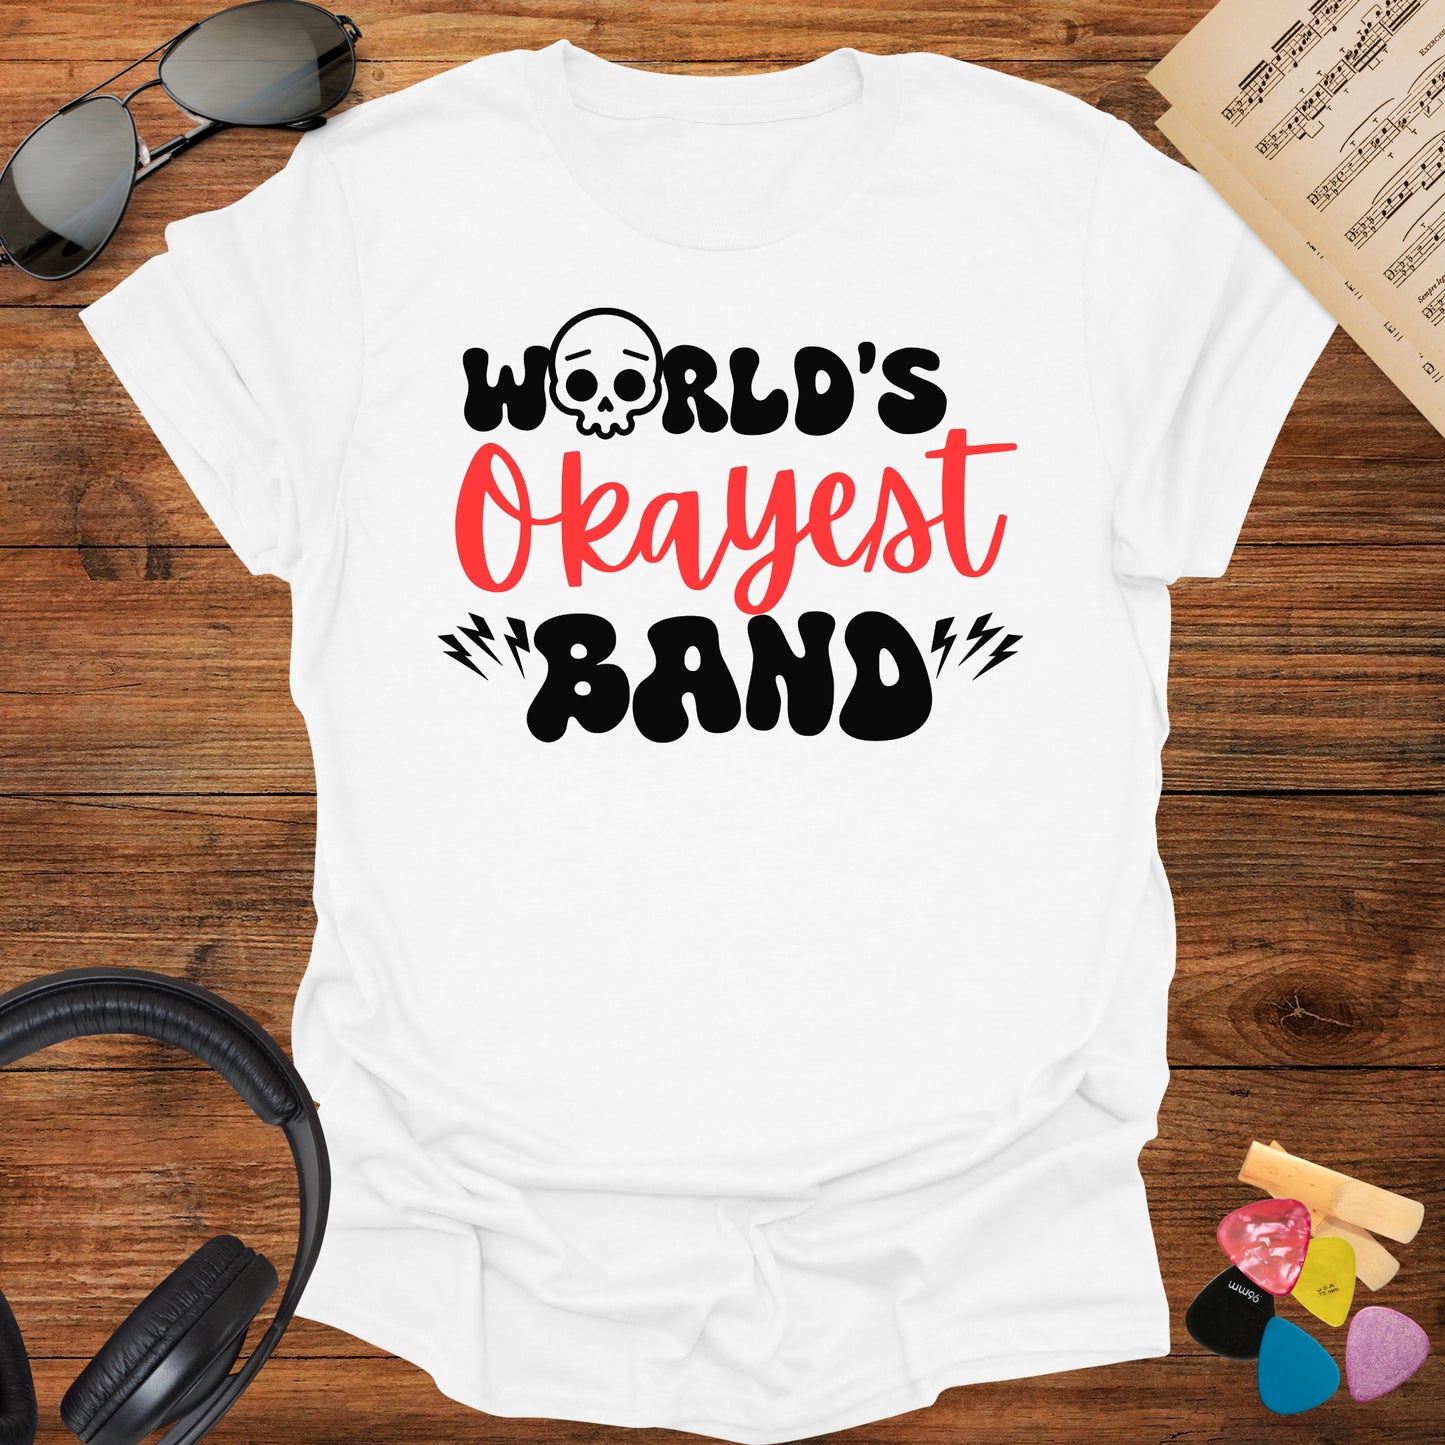 World's "Okayest" Band T-Shirt